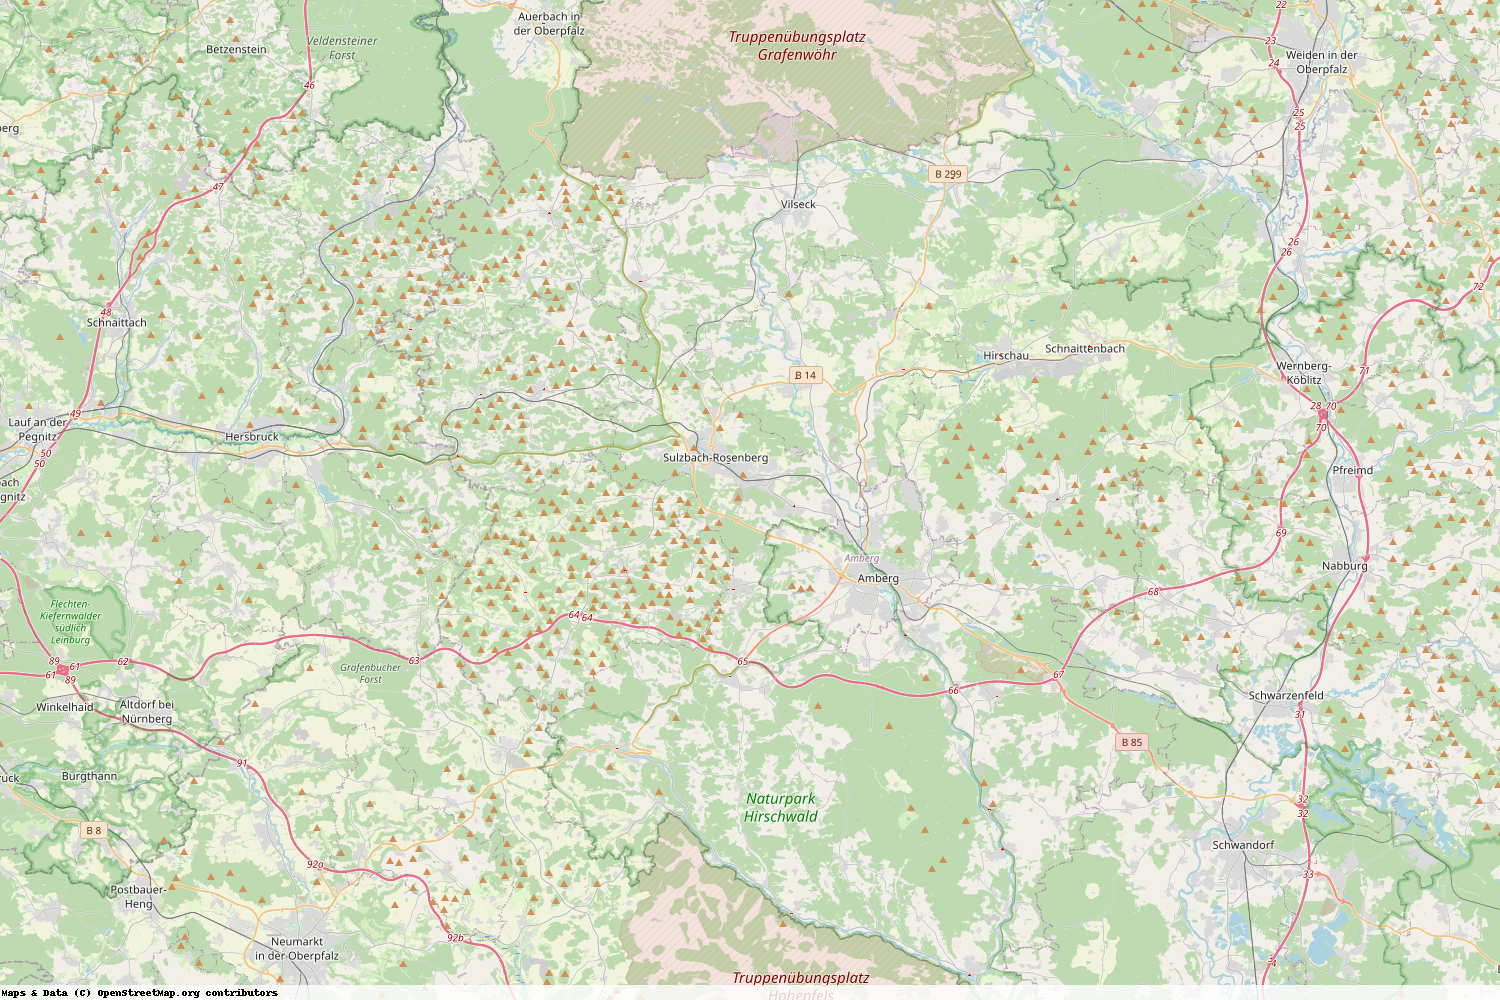 Ist gerade Stromausfall in Bayern - Amberg-Sulzbach?